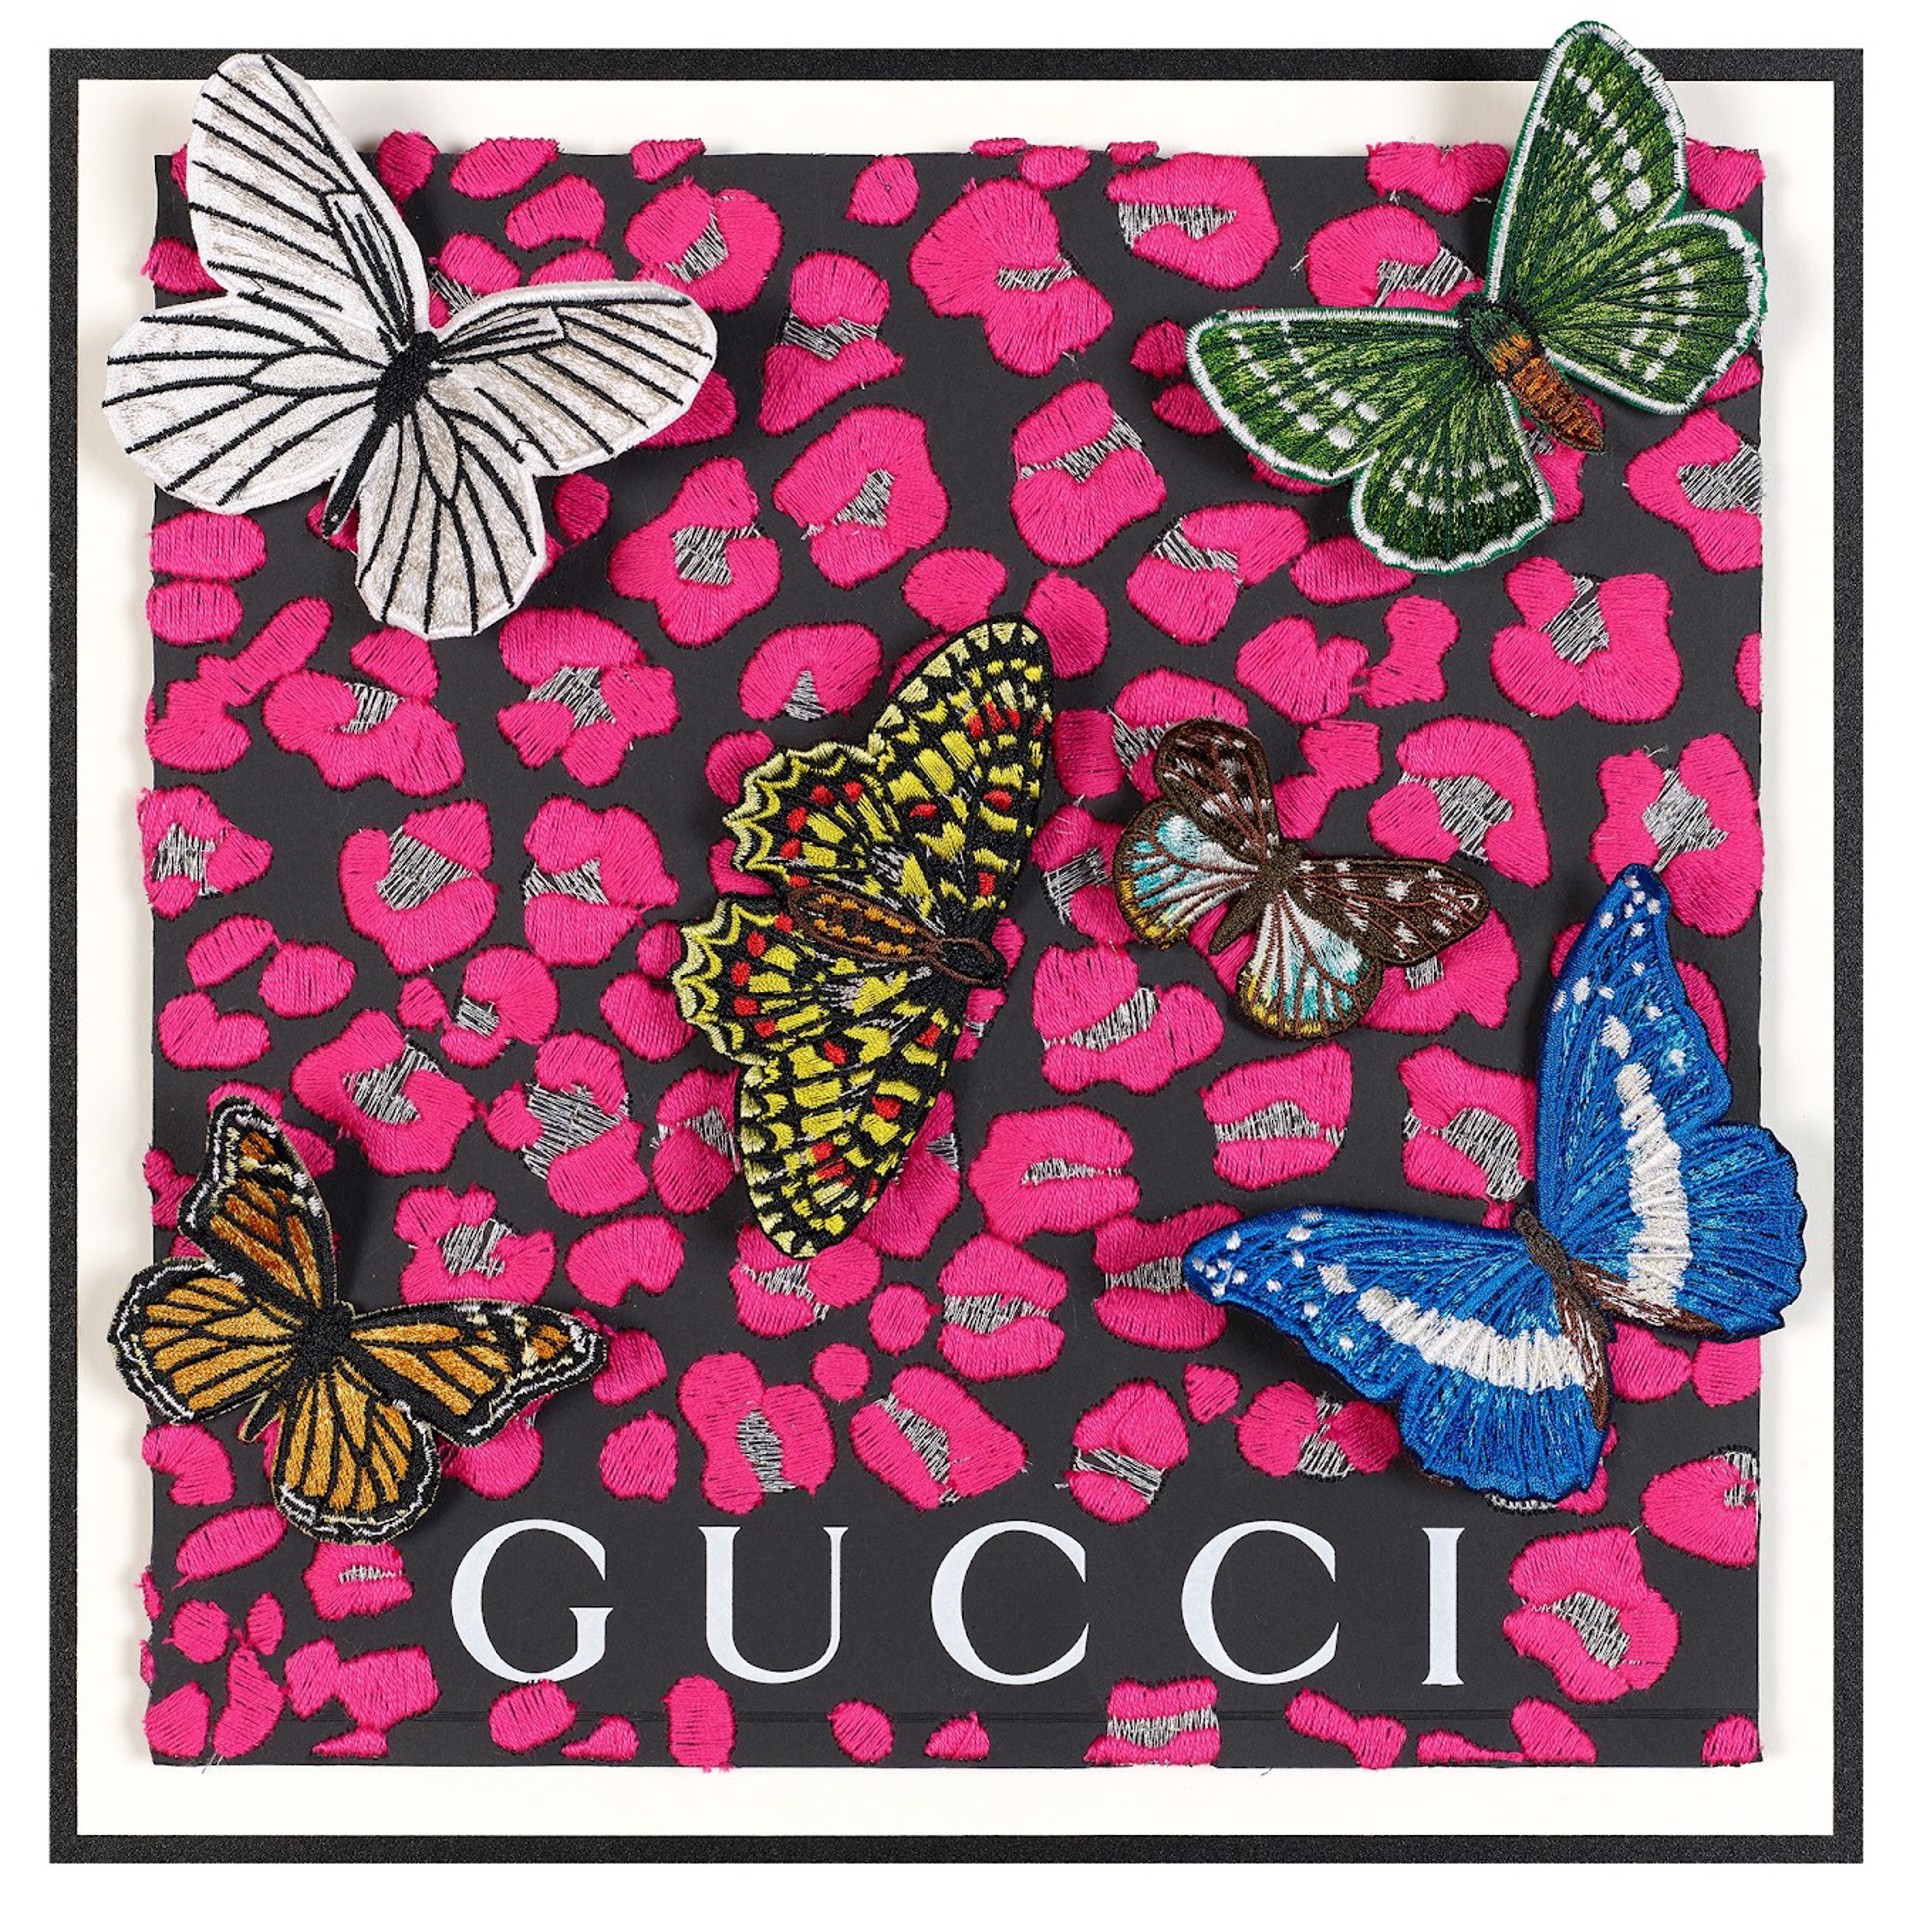 Gucci L-Print VIII by Stephen Wilson